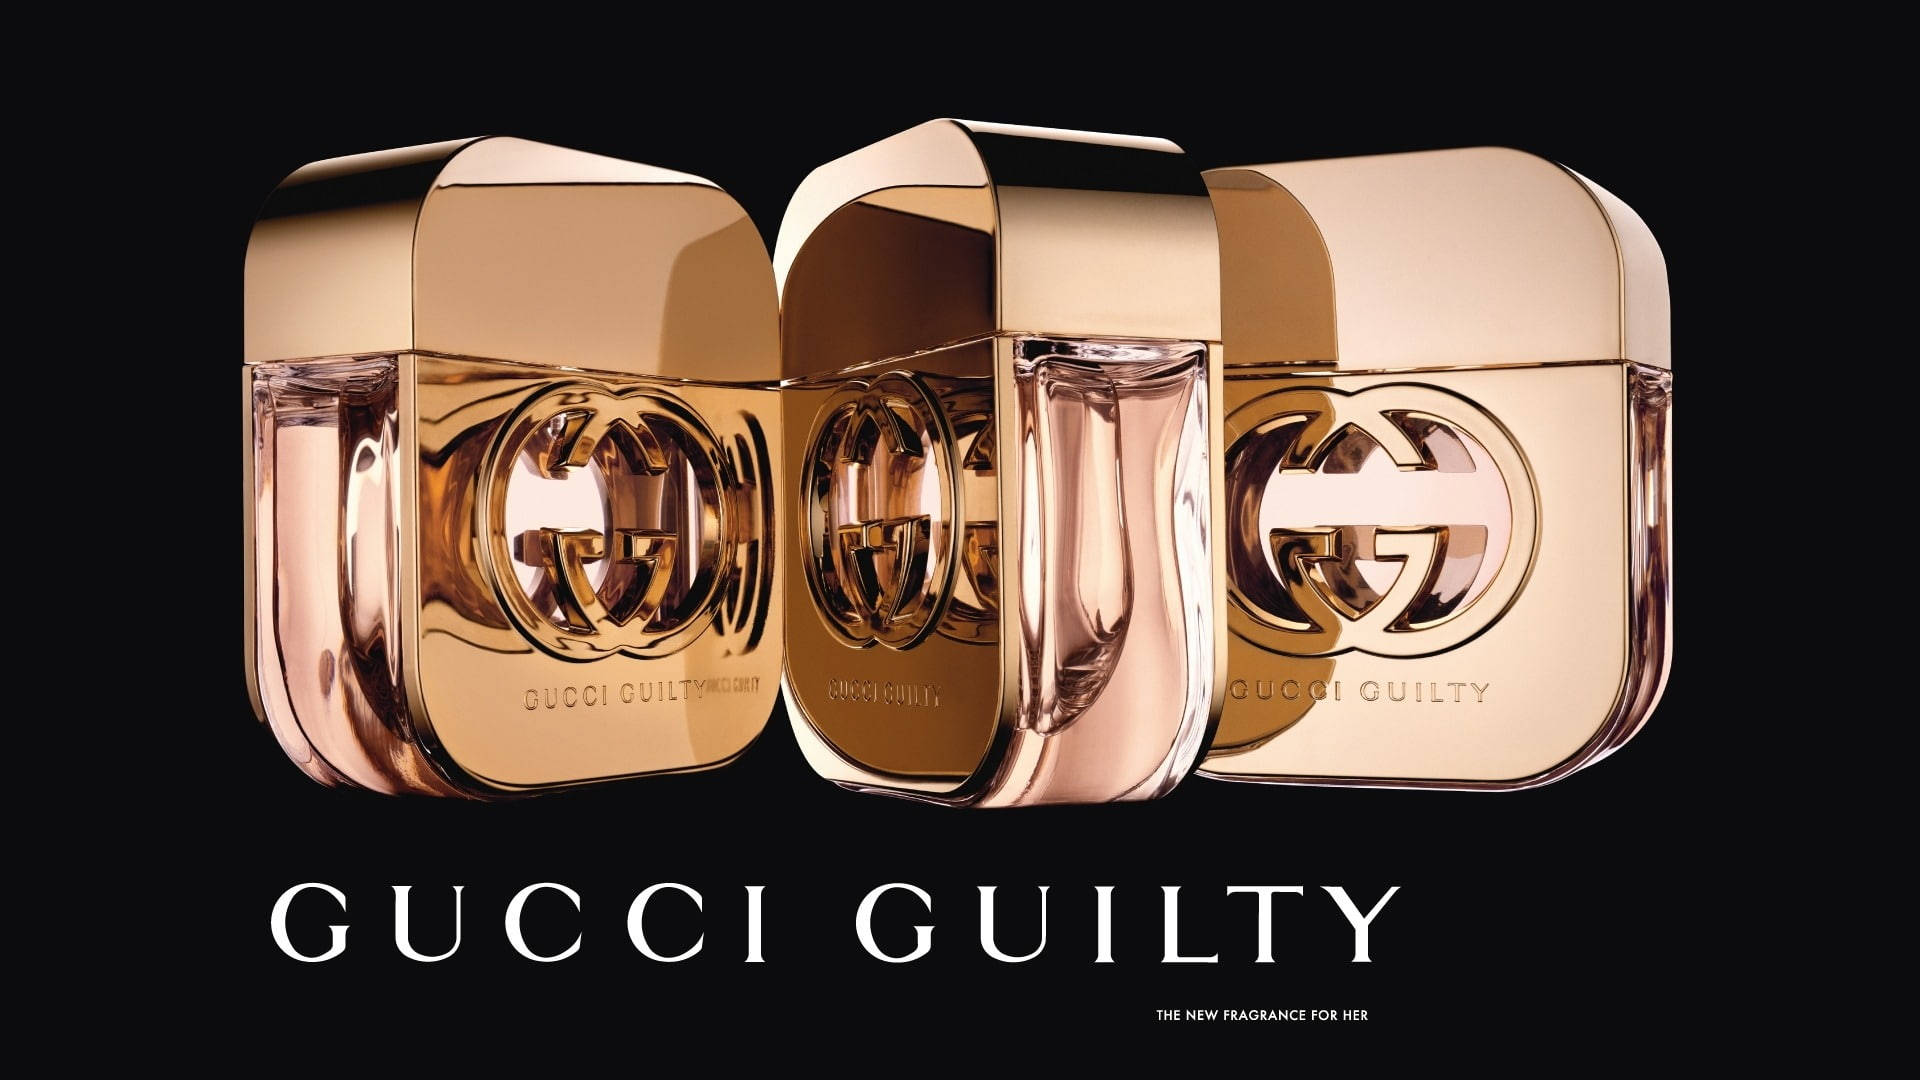 Gucci Guilty Perfume Advert Wallpaper